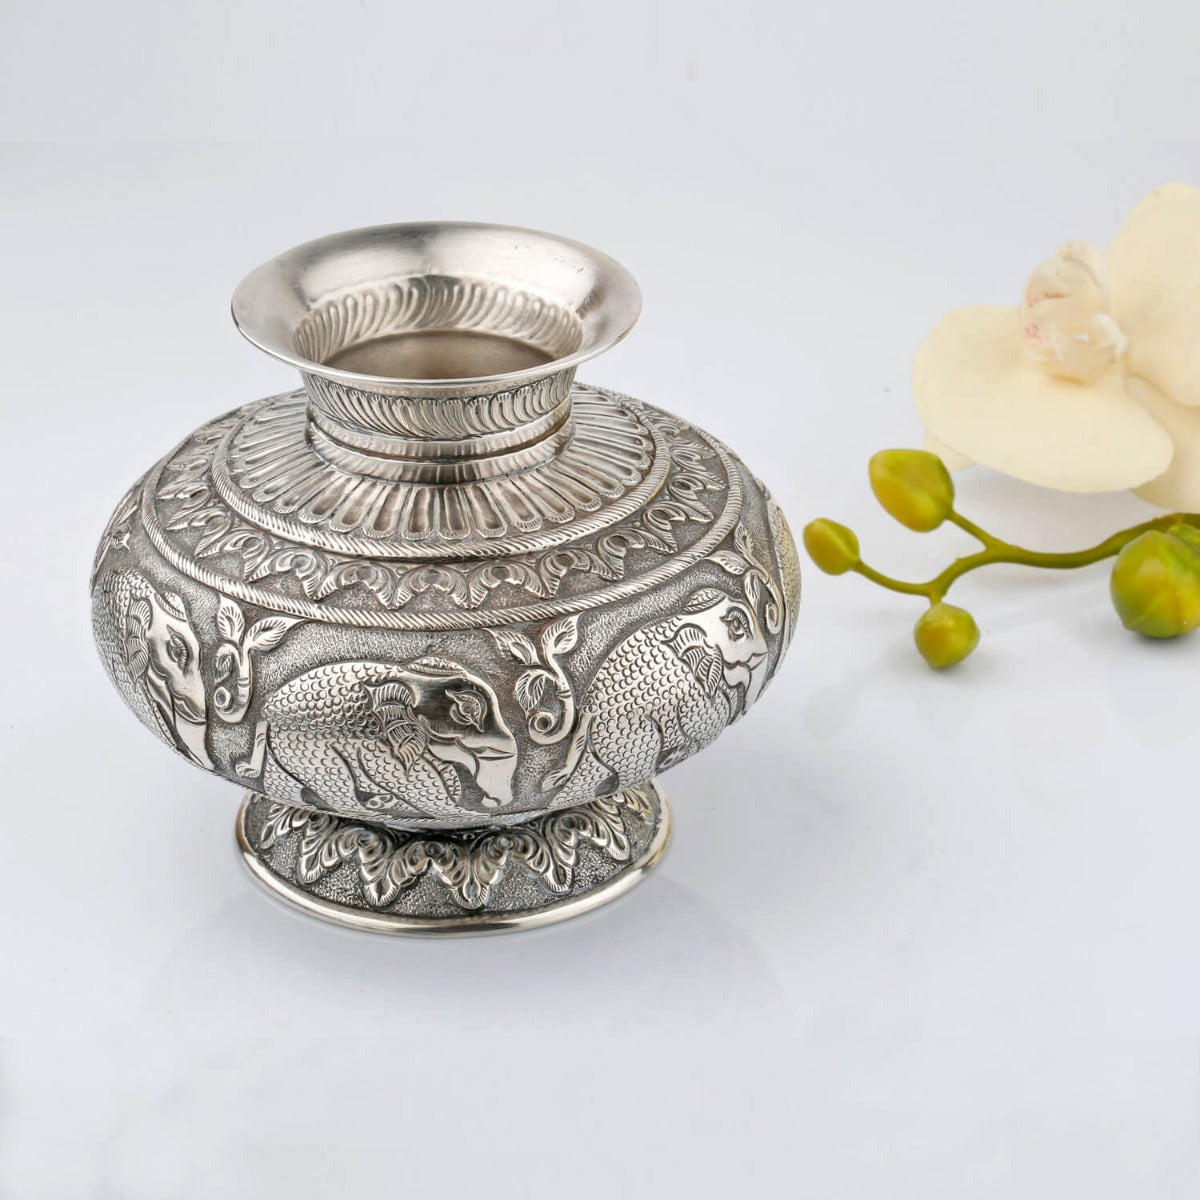 Magnificient elephant carved silver pot